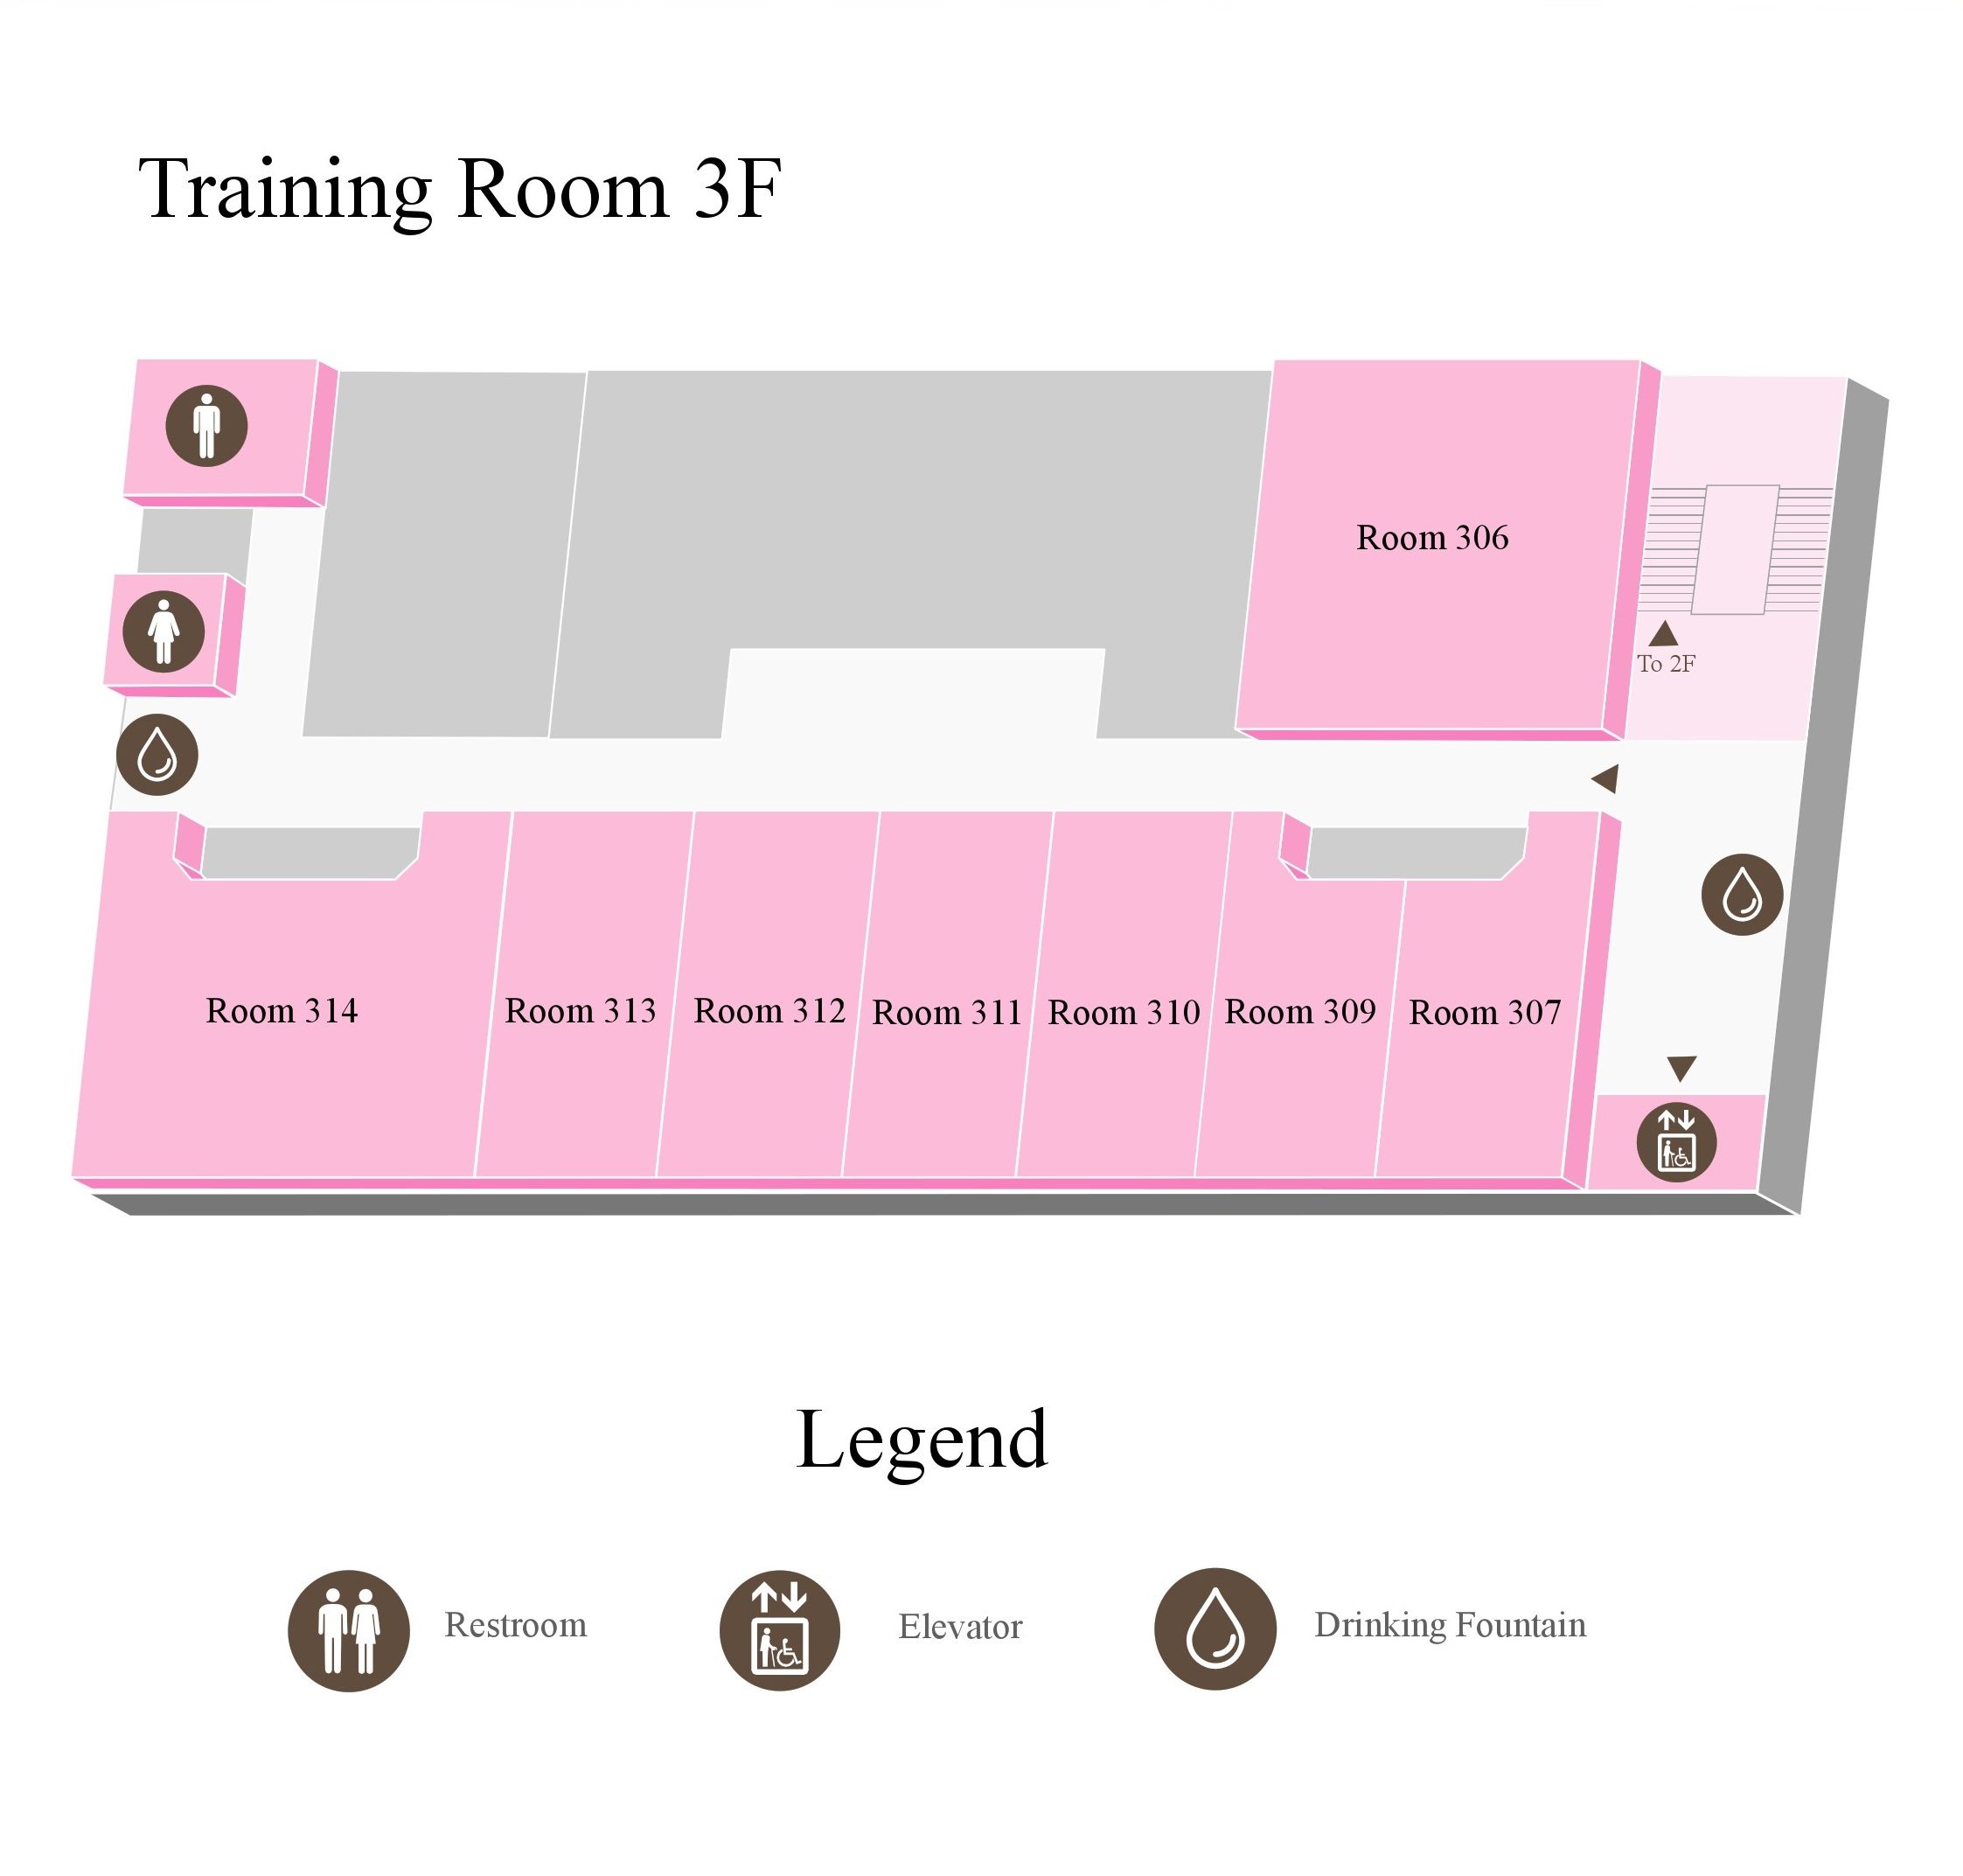 Training Room 3F